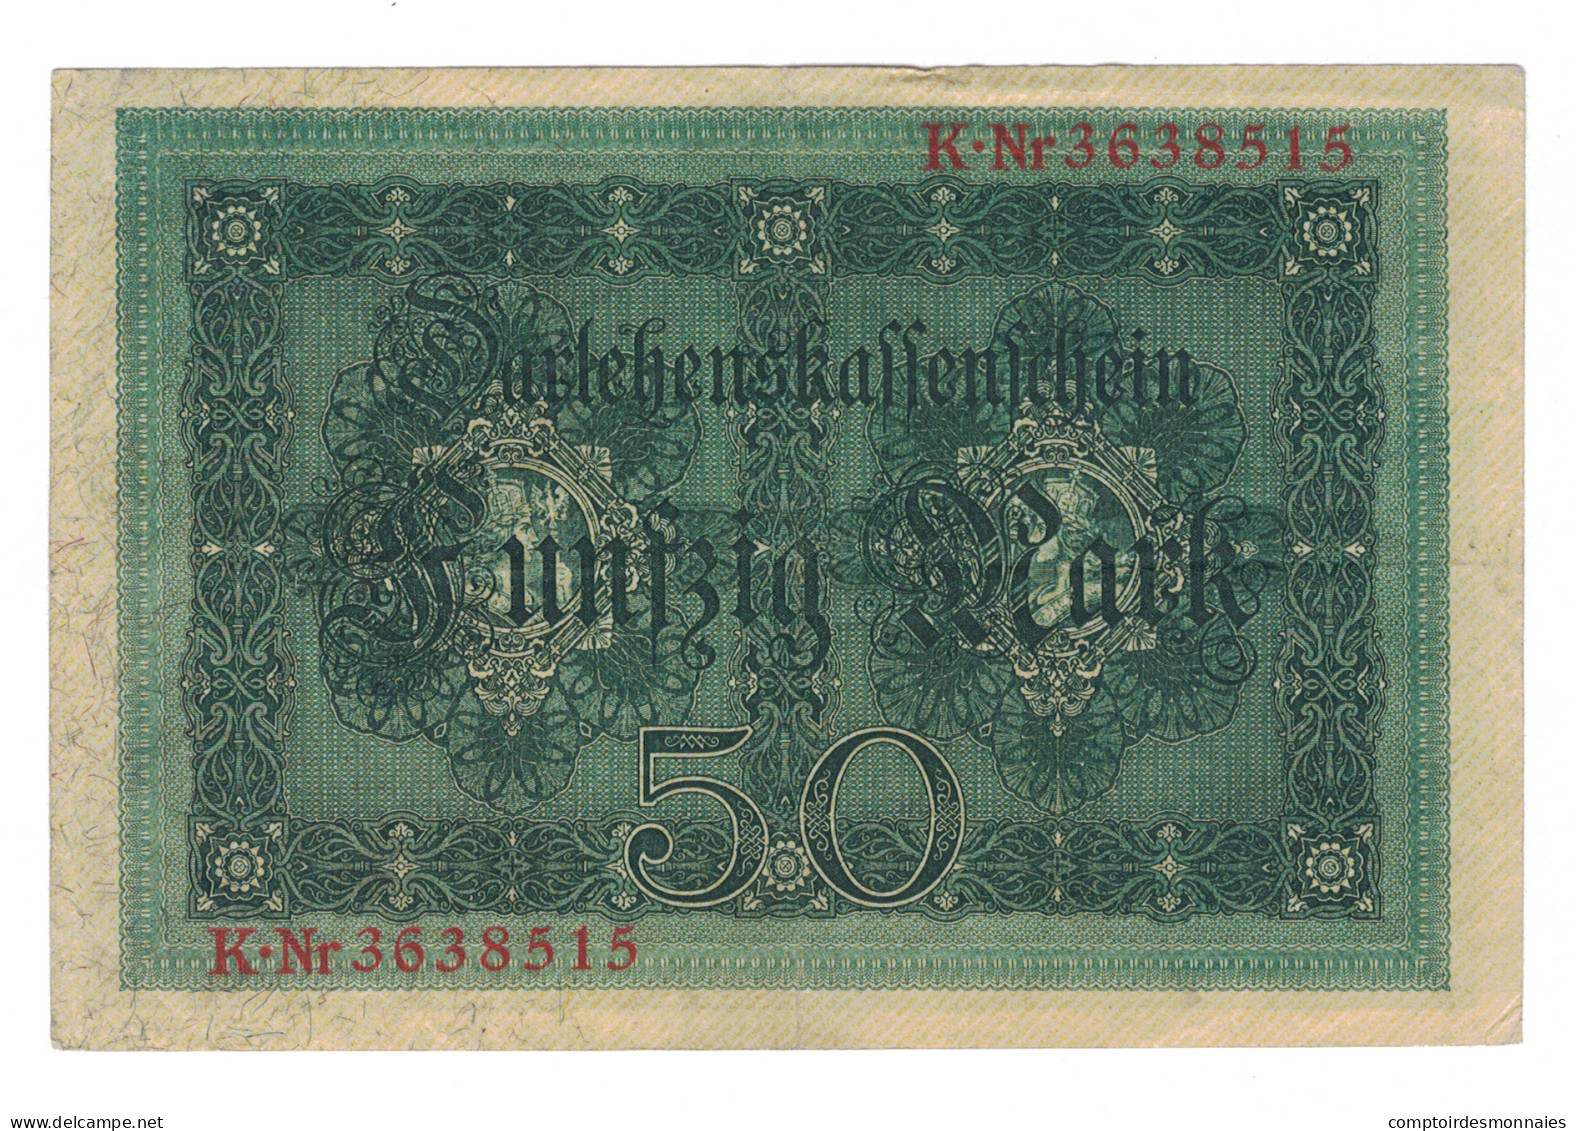 Billet, Allemagne, 50 Mark, 1914, 1914-08-05, KM:49b, TTB - 5 Mark